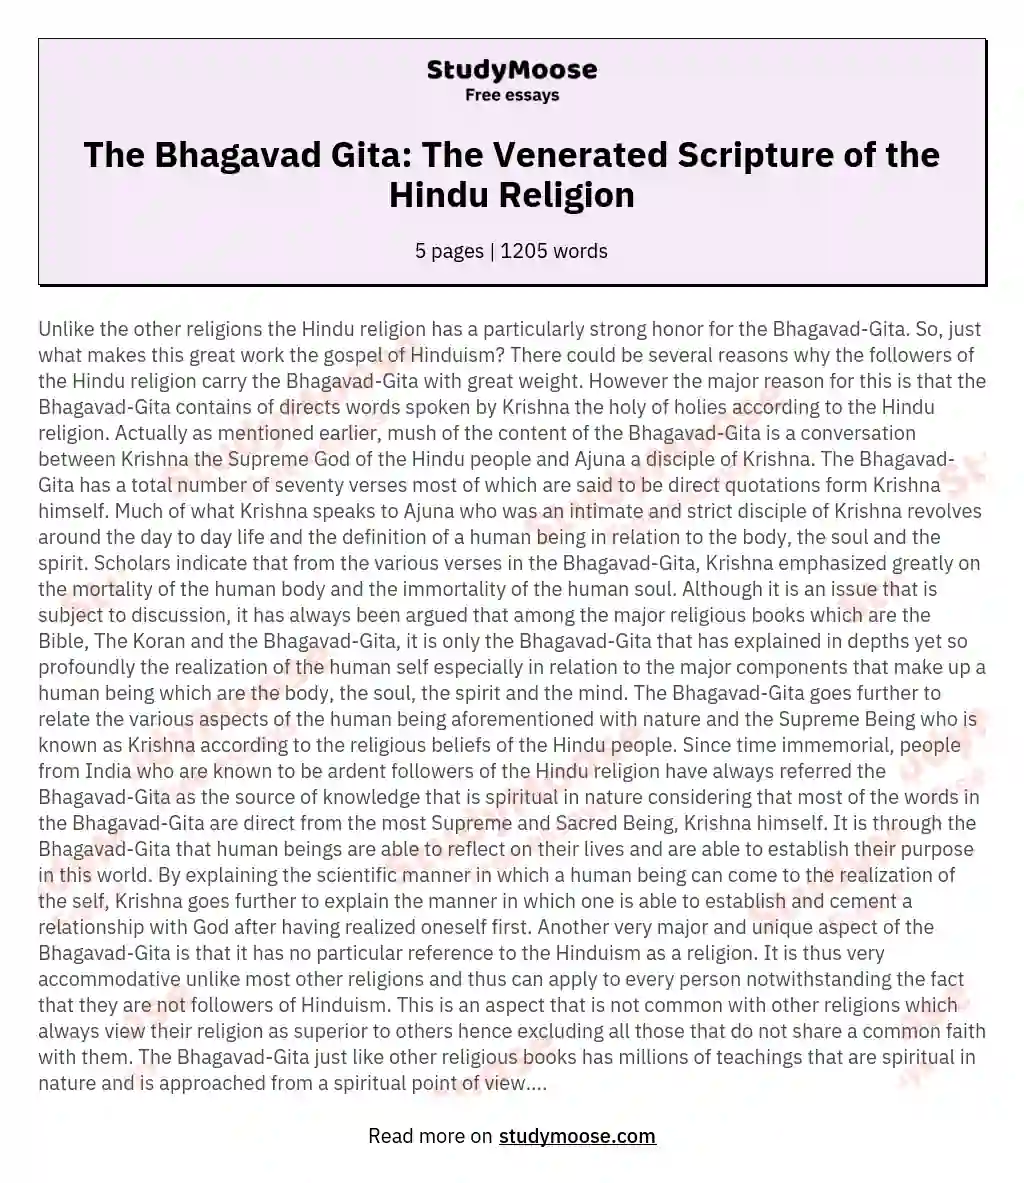 The Bhagavad Gita: The Venerated Scripture of the Hindu Religion essay